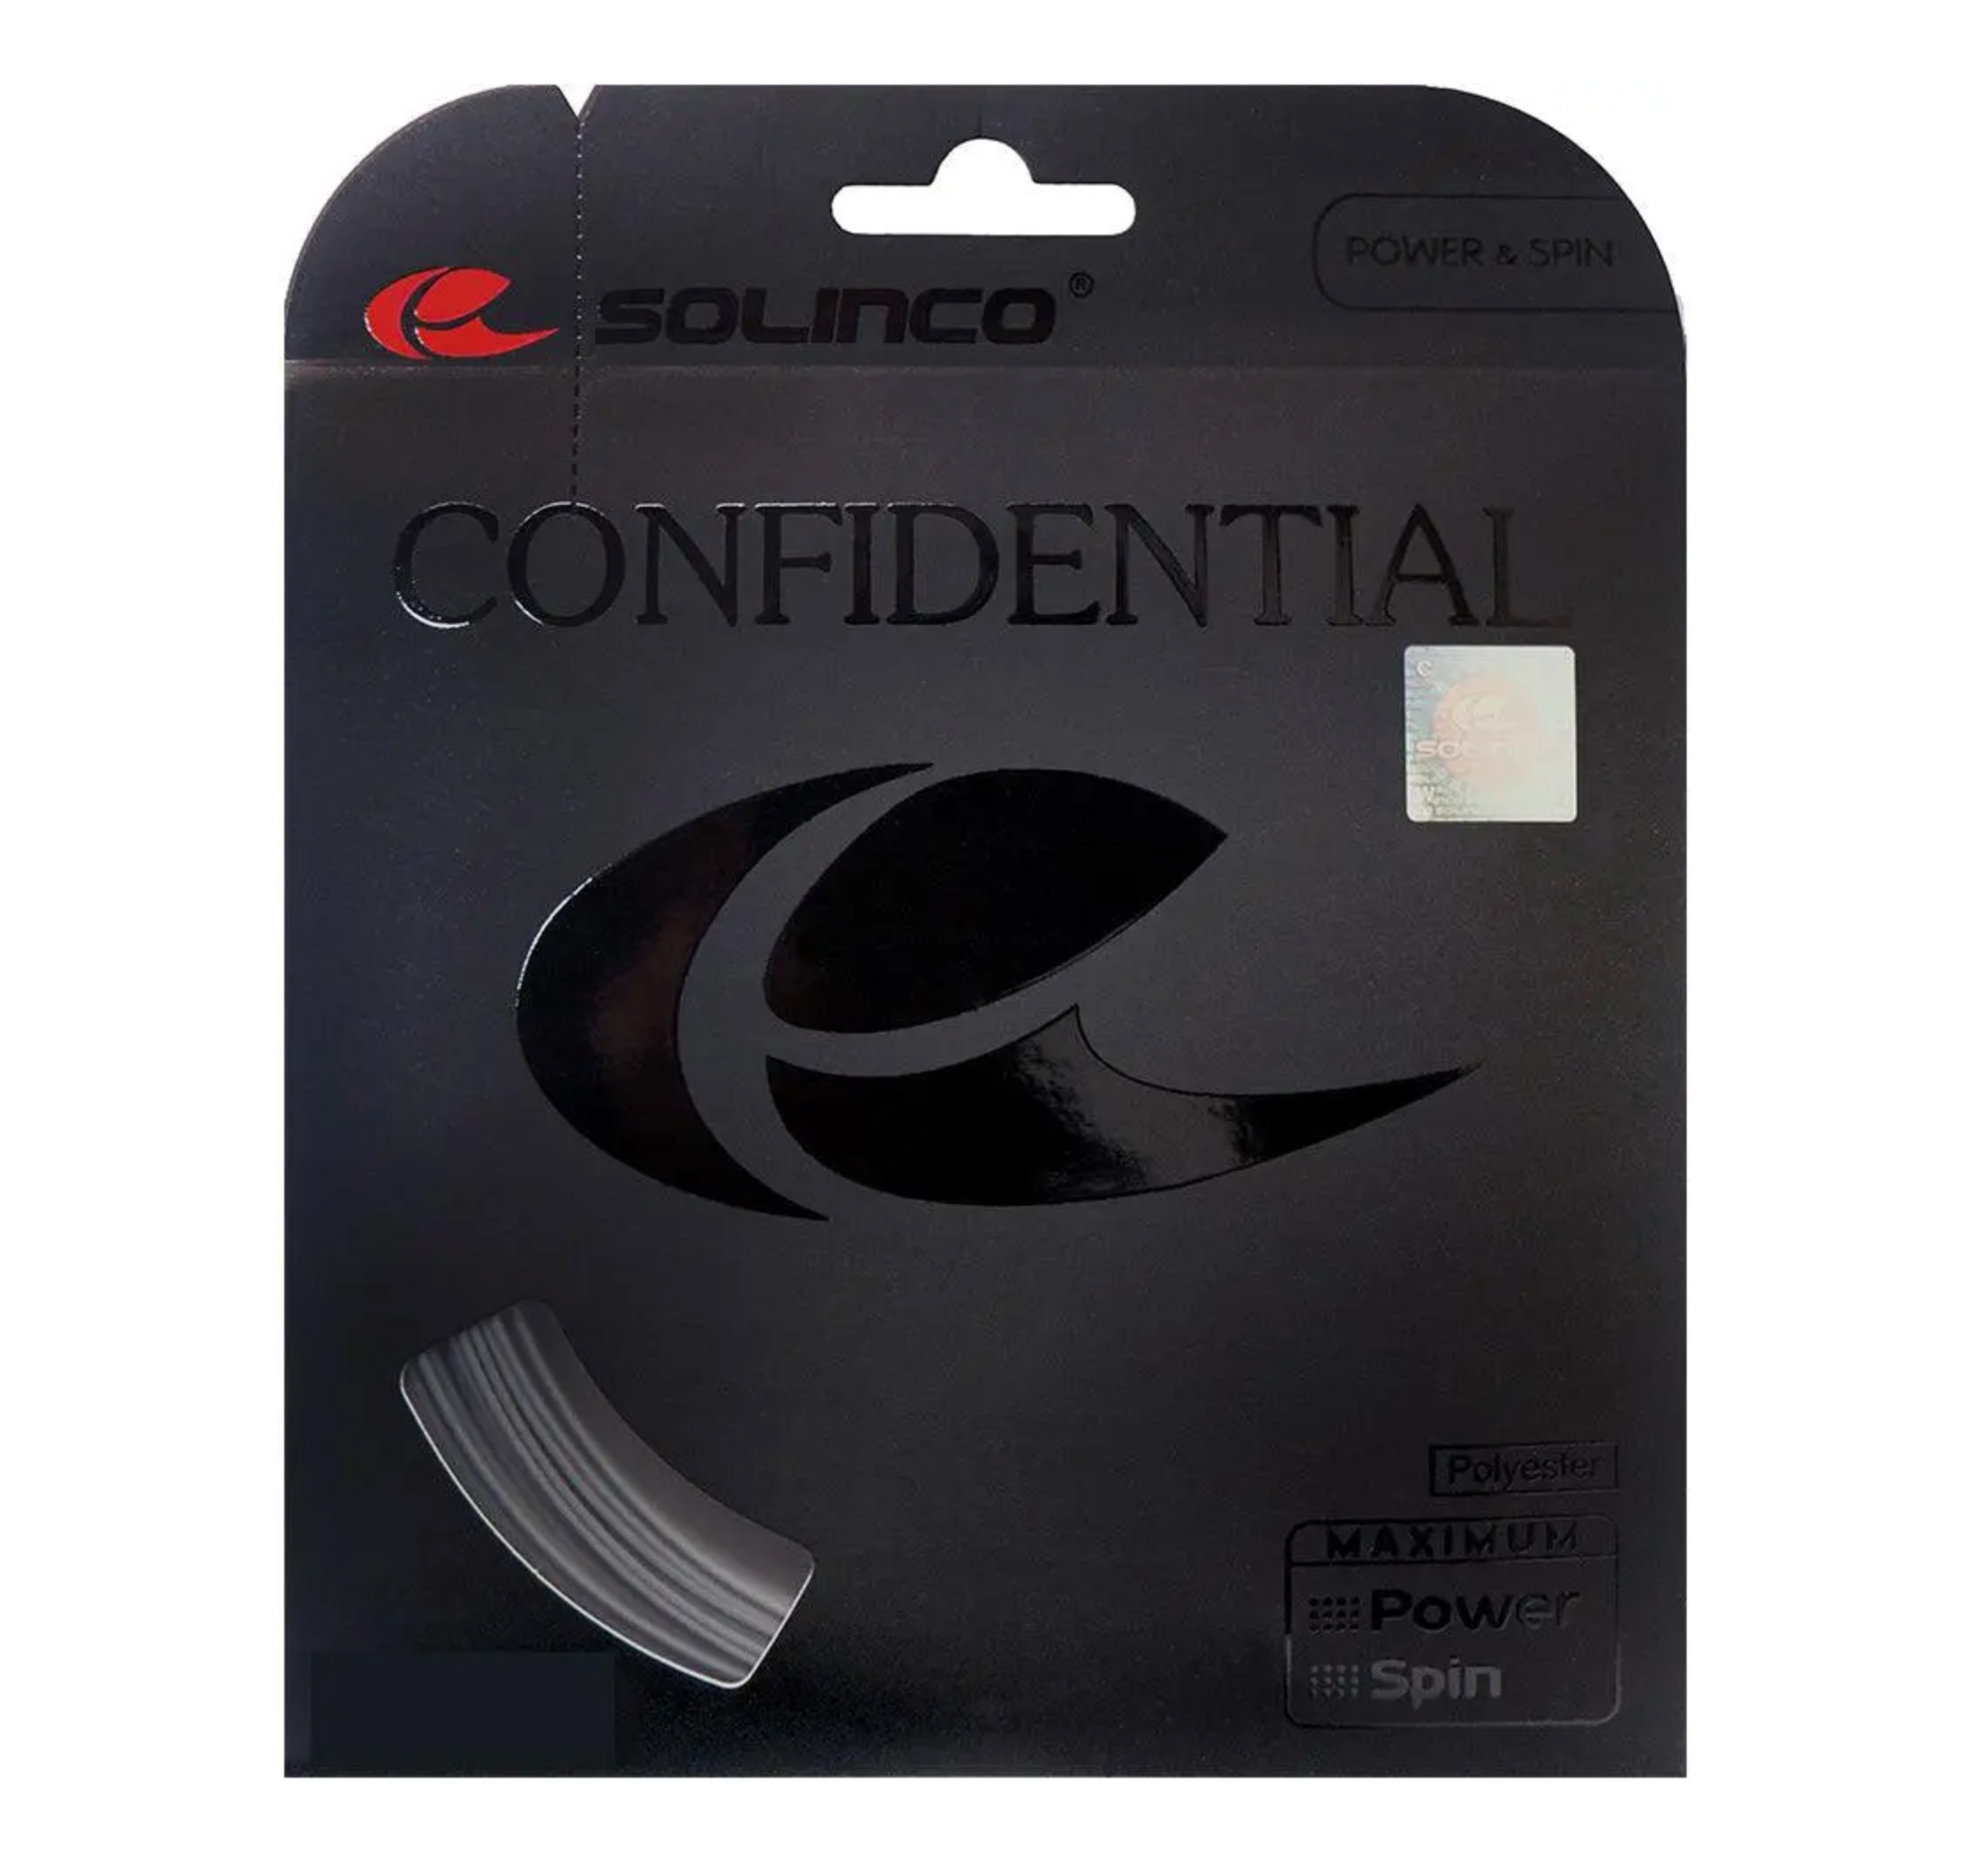 Solinco Confidential 17 Tennis String Set close-up detail